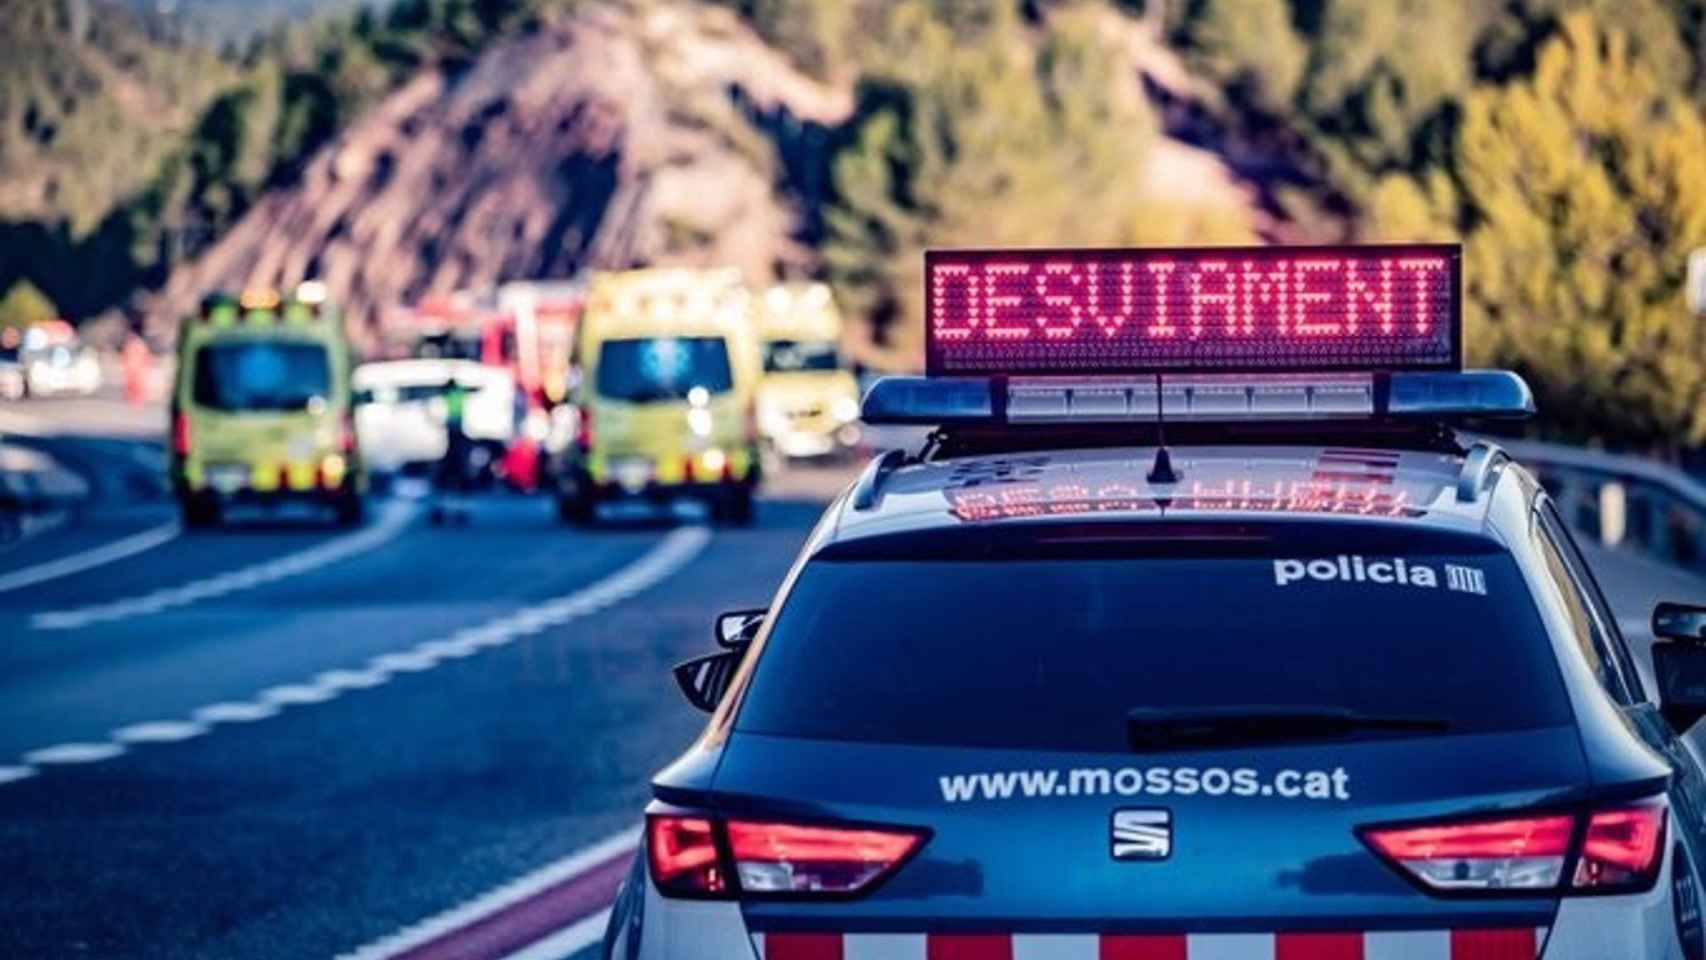 Un coche de Mossos d'Esquadra y ambulancias del Sistema d'Emergències Mèdiques (SEM) durante un accidente de tráfico en una imagen de archivo / @TRANSIT